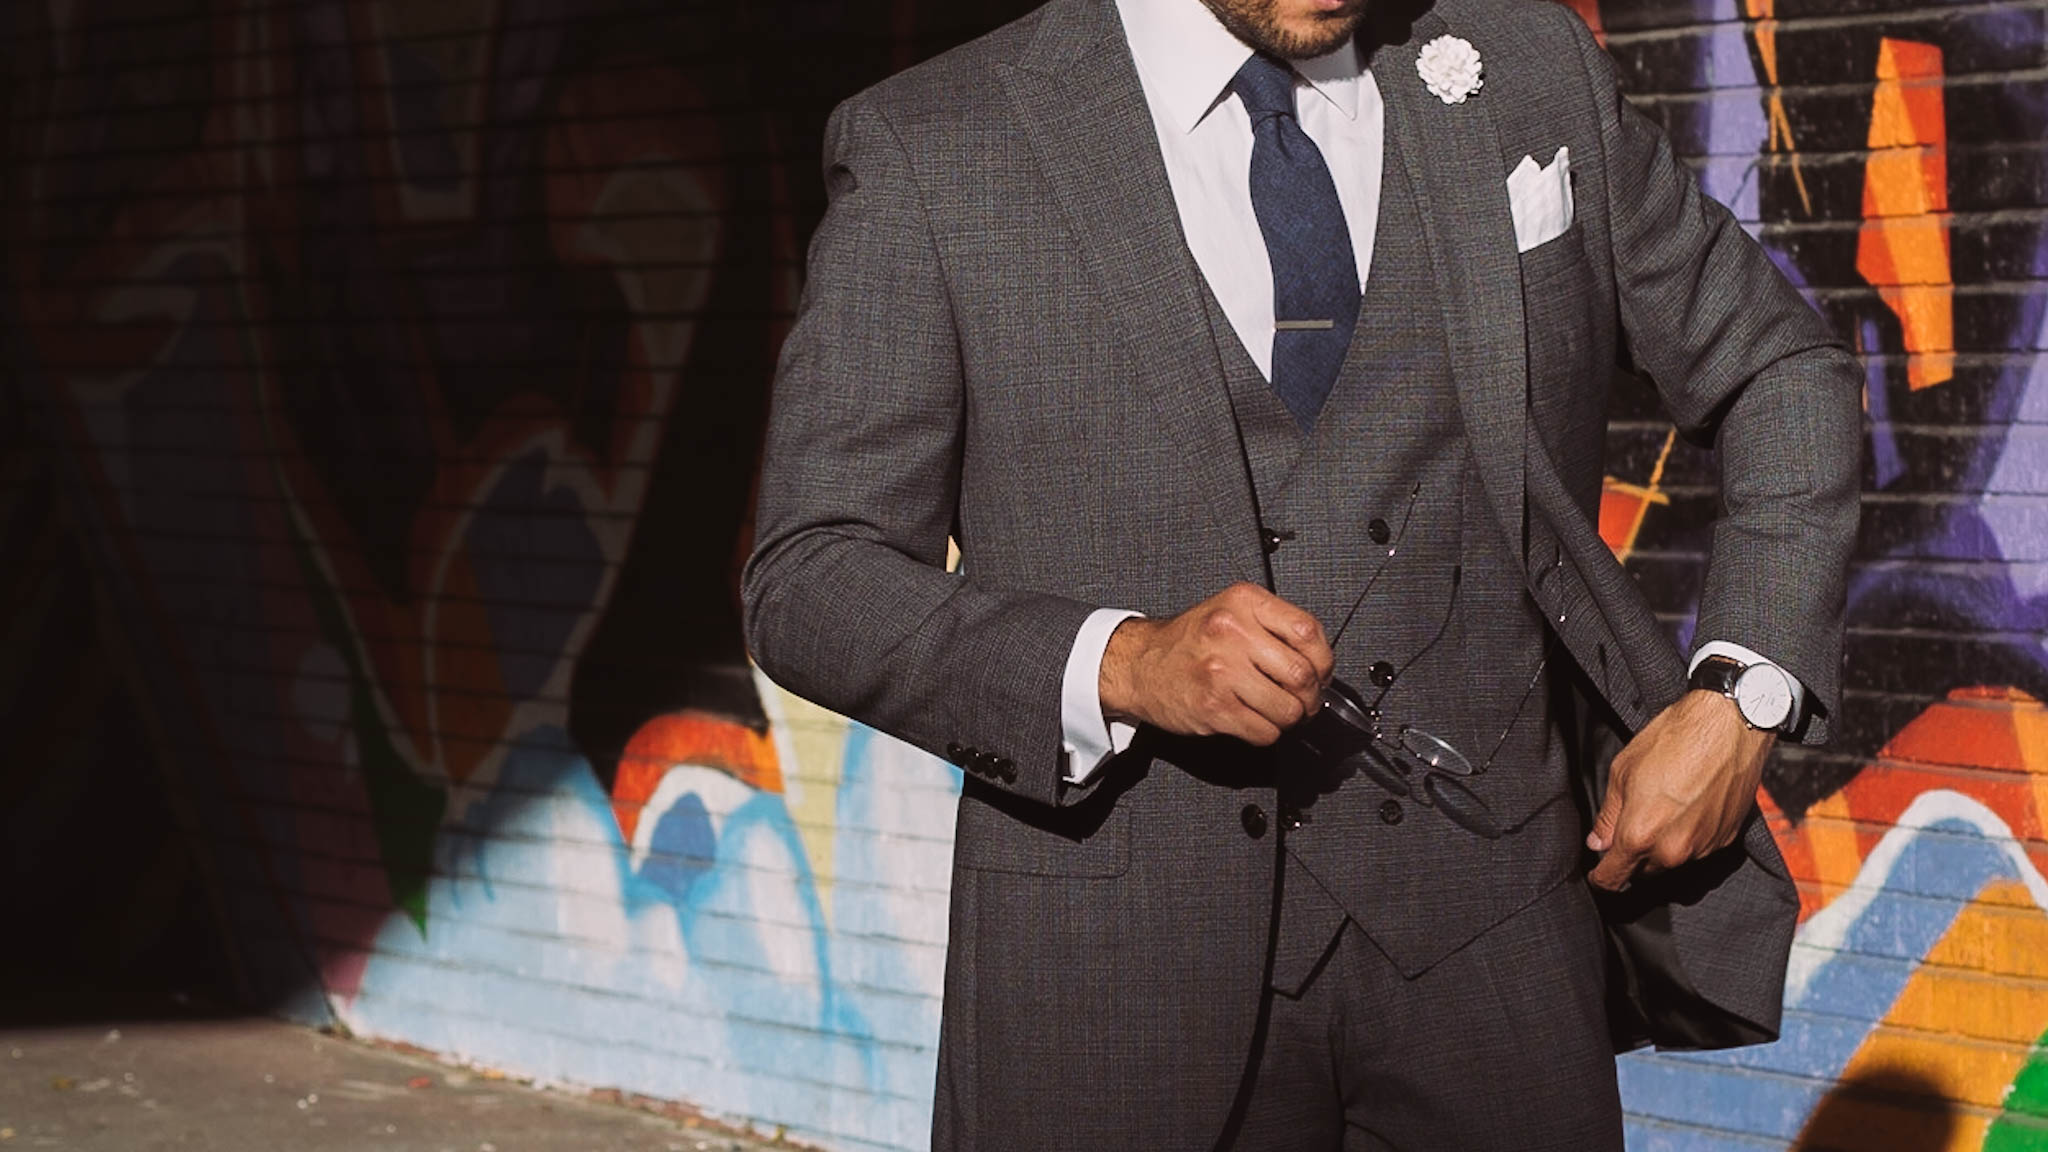 Sayki suit - grey three piece suit - white shirt and blue tie - ties.com tie - liberty shirt co - dandy in the Bronx - gentleman